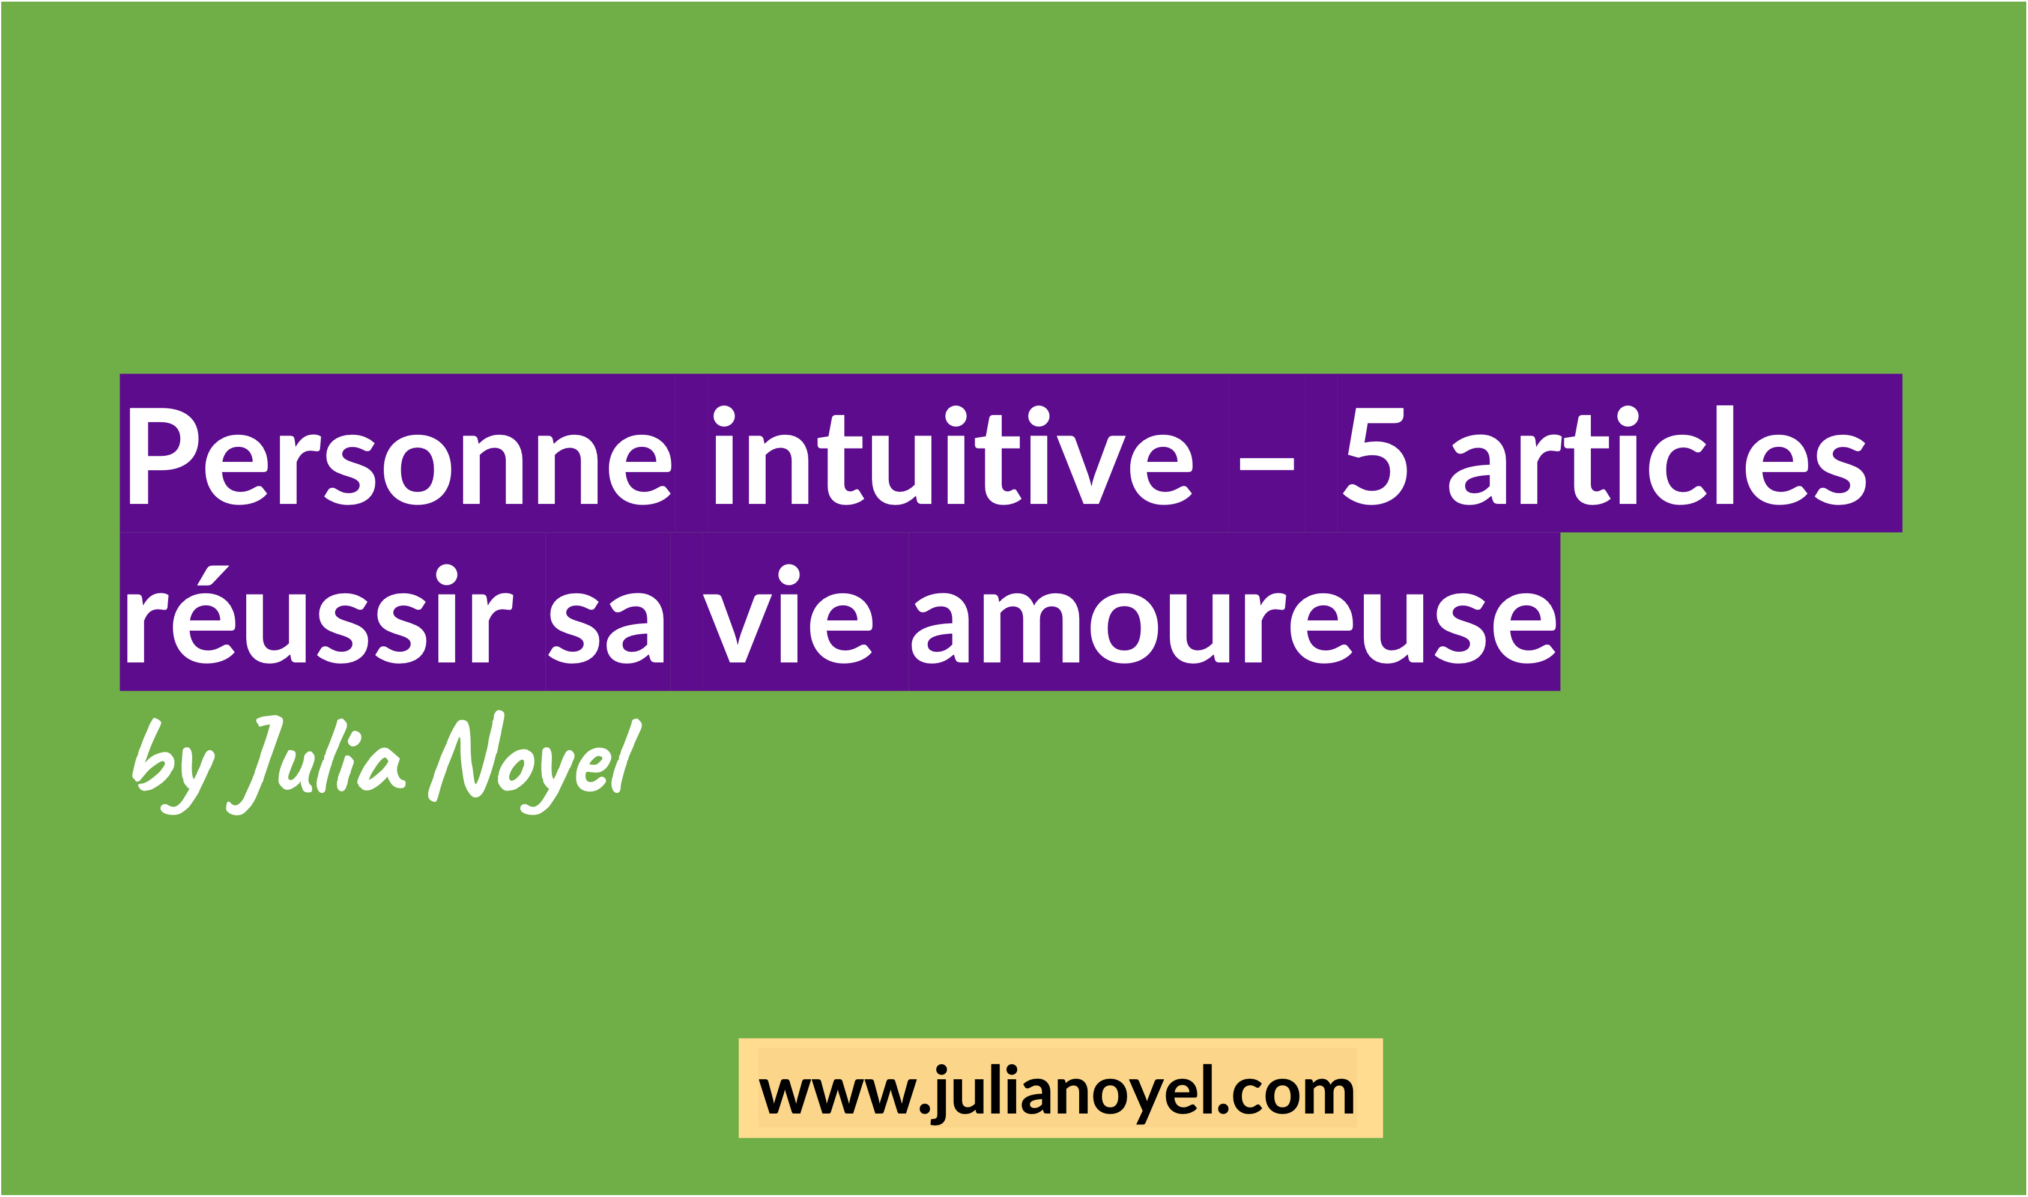 Personne intuitive – 5 articles réussir sa vie amoureuse by Julia Noyel